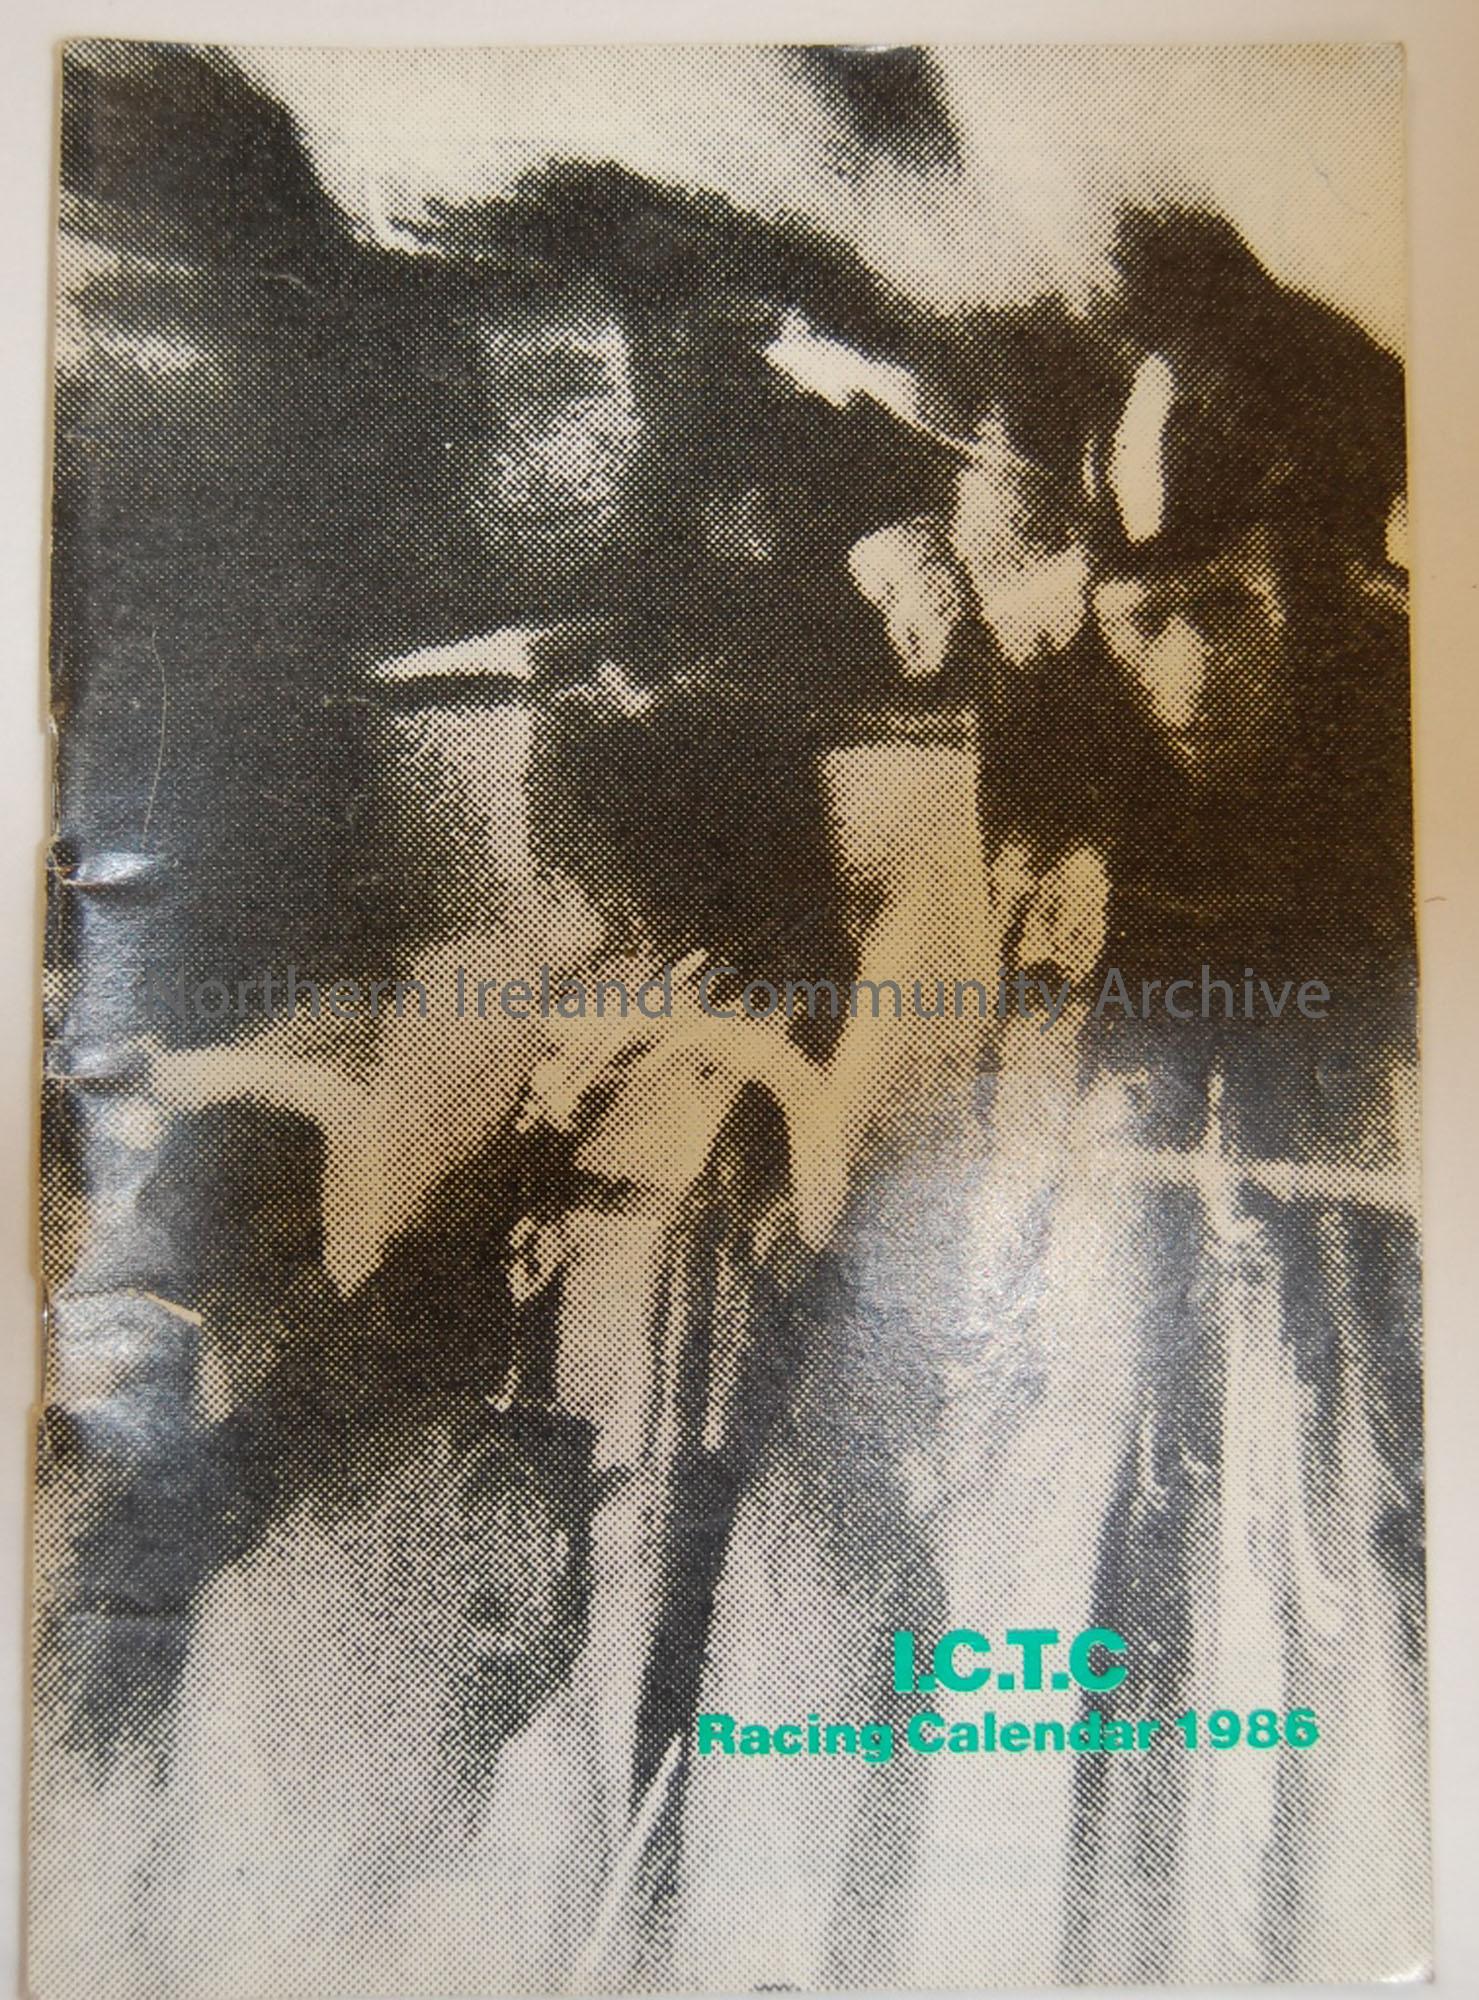 Irish Cycling Tripartite Committee (ICTC) Racing Calender 1986